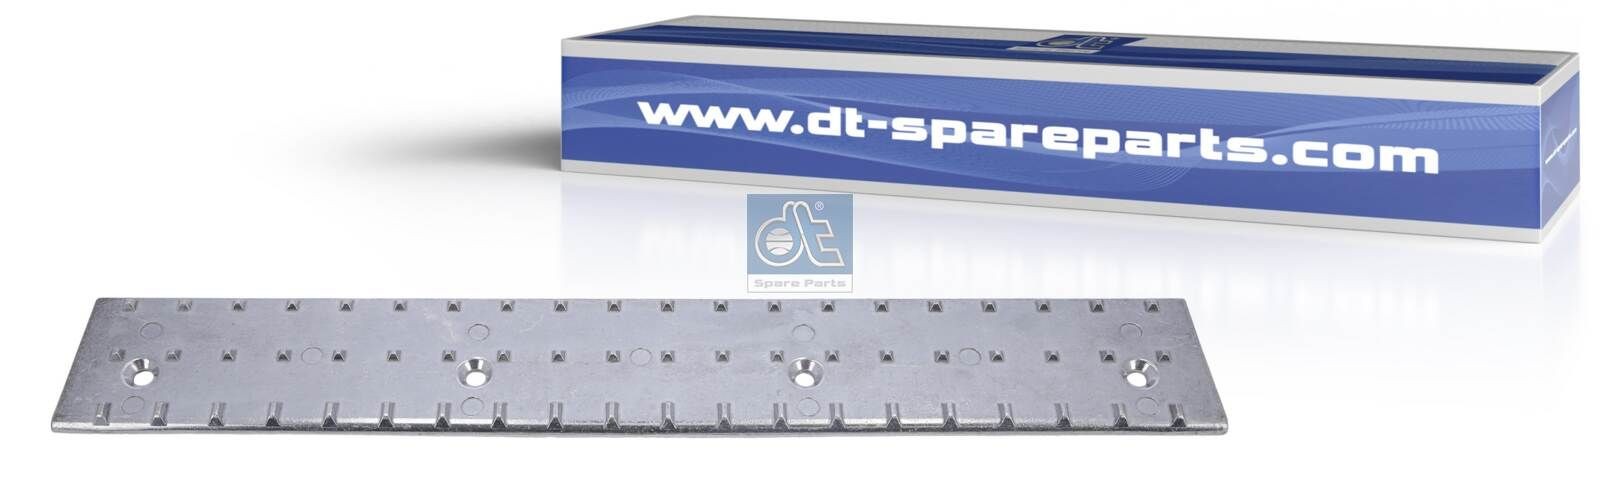 5.16094 DT Spare Parts Trittbrett DAF 95